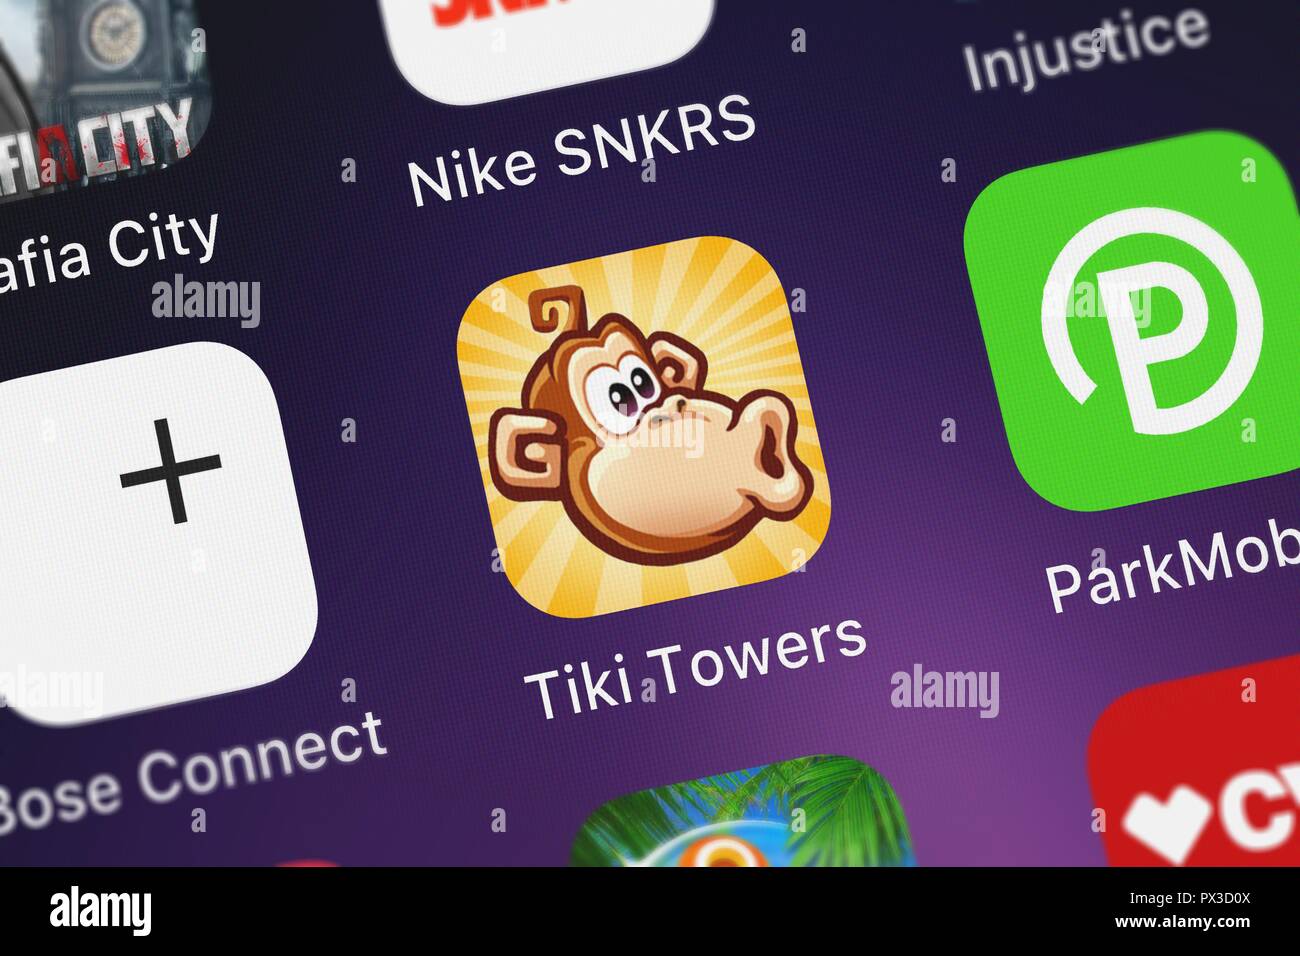 Paplinko on the App Store